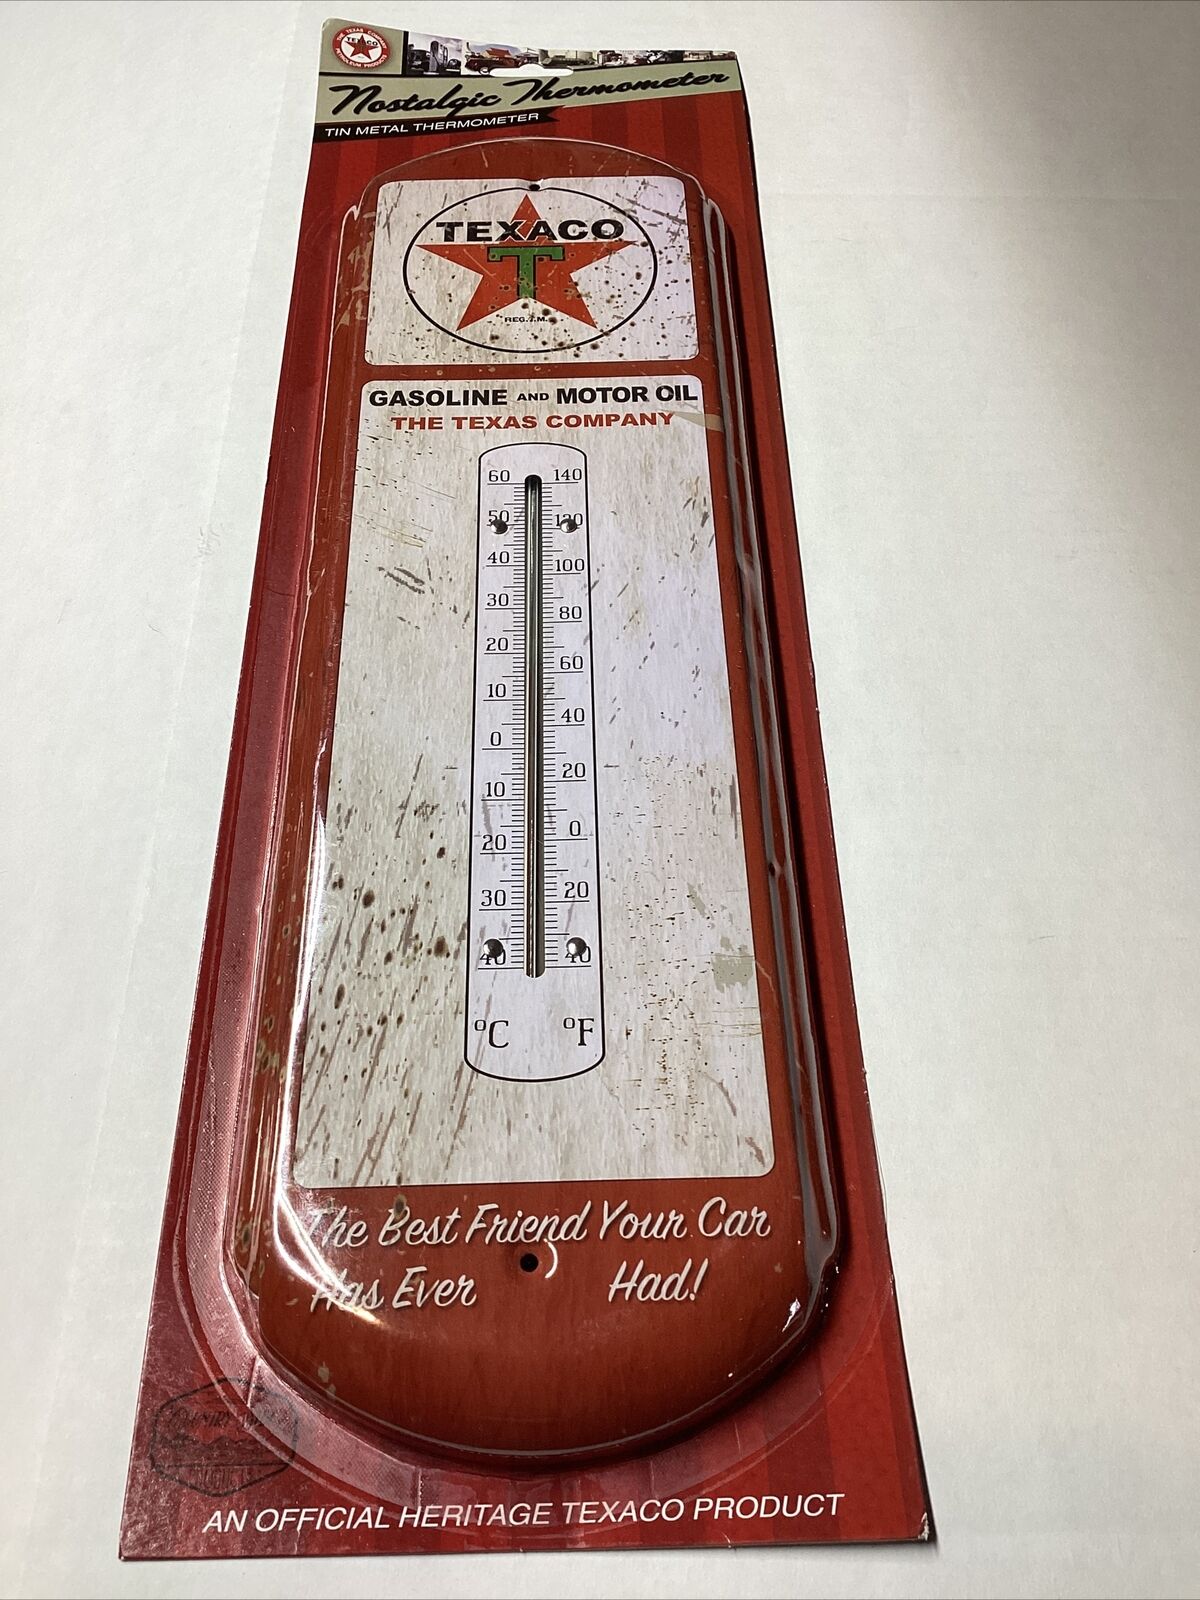 Texaco Replica Nostalgic Metal Thermometer - Official Heritage Texaco Product